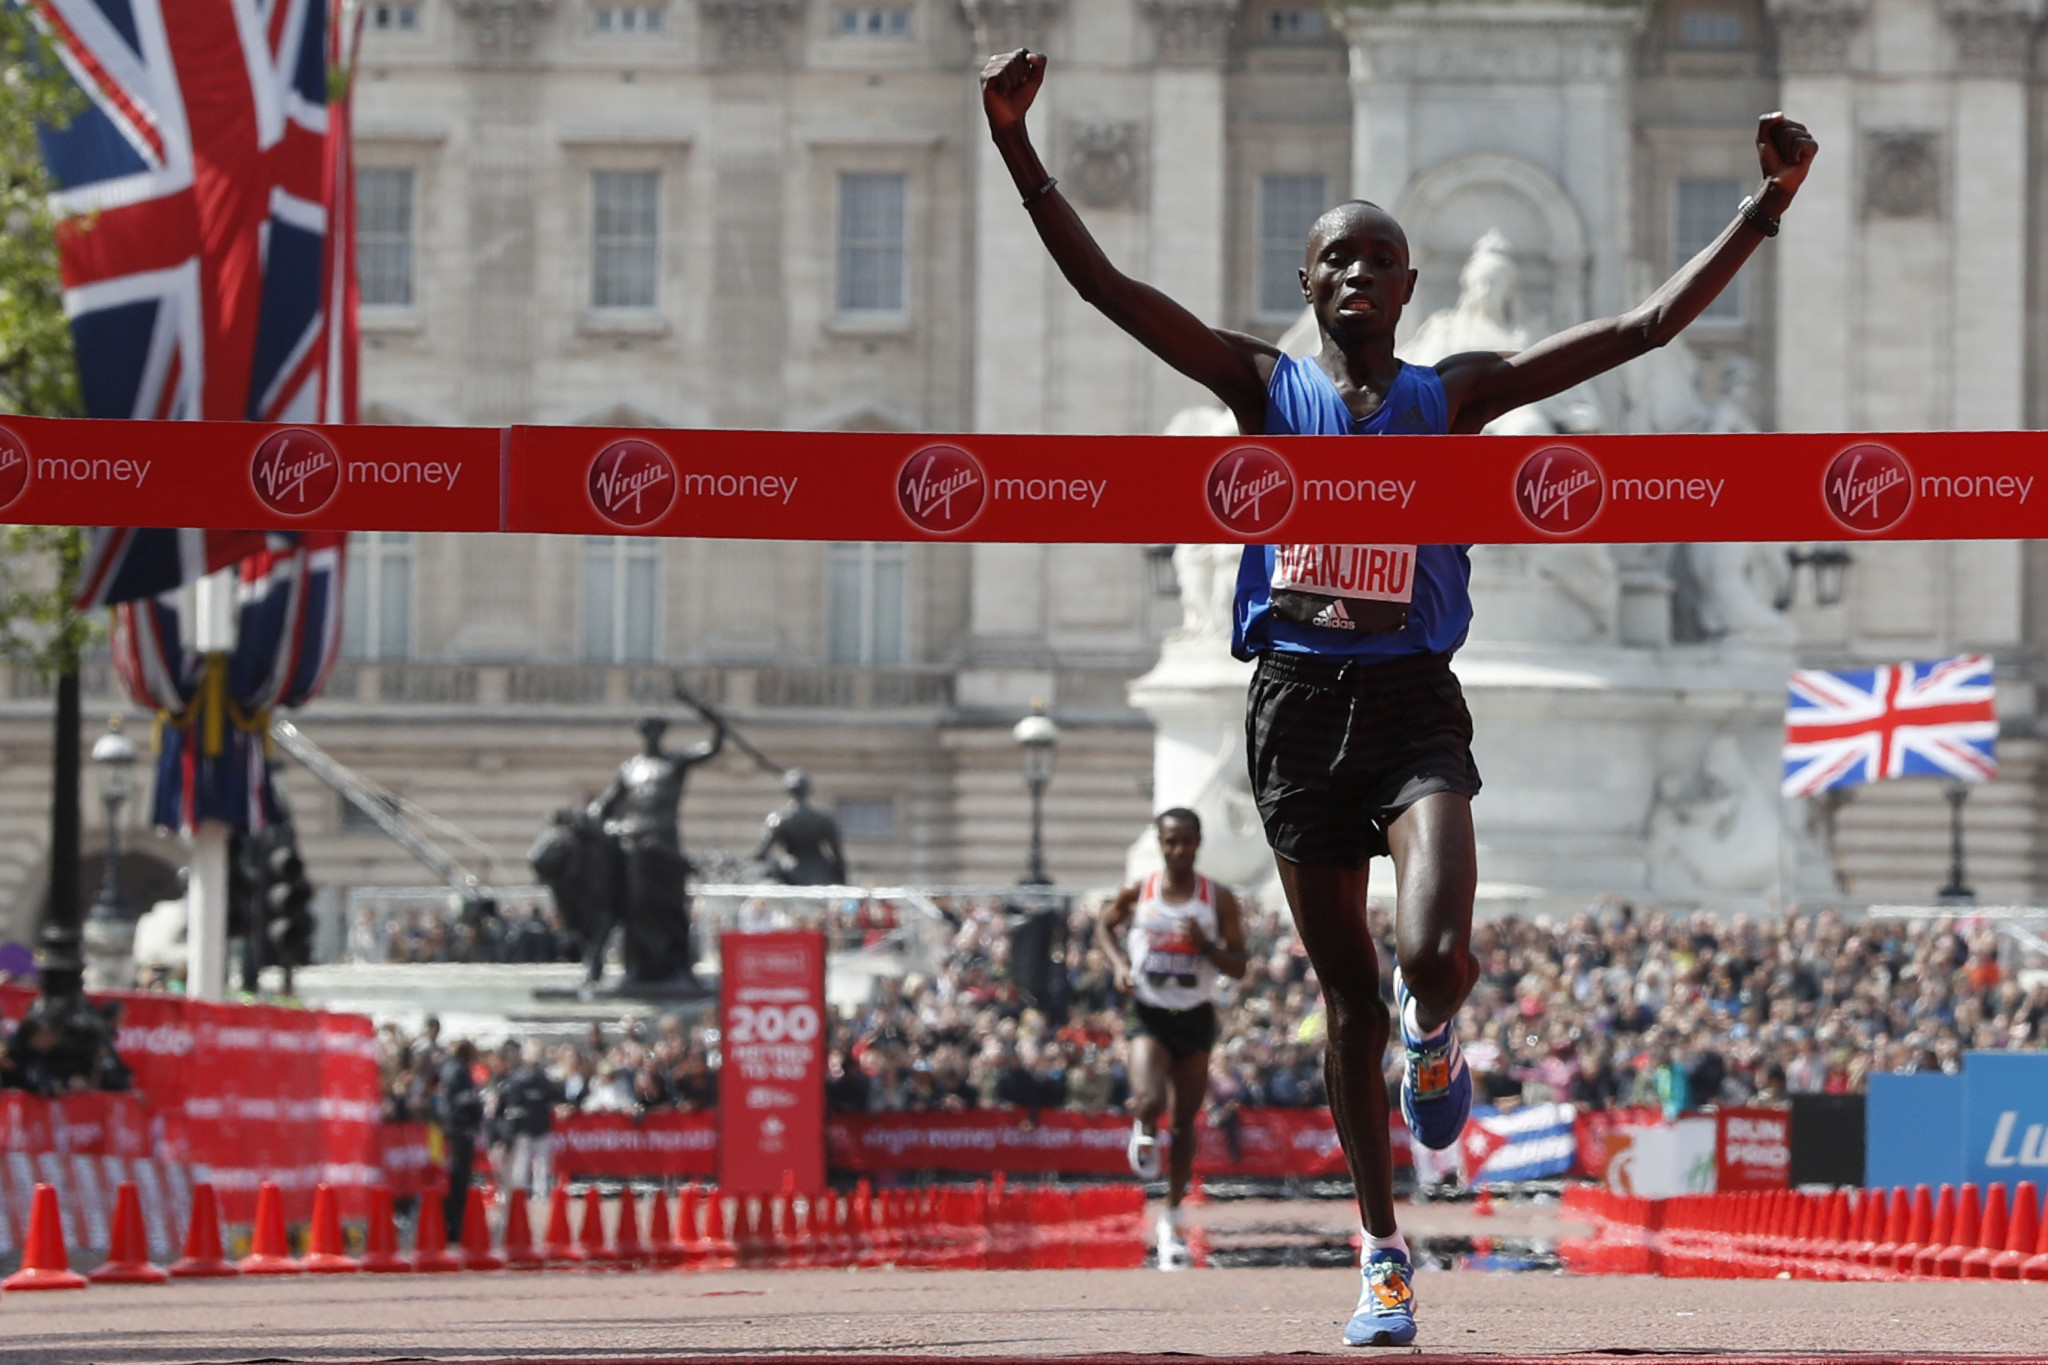 Daniel Wanjiru won the London Marathon back in 2017 ©Getty Images